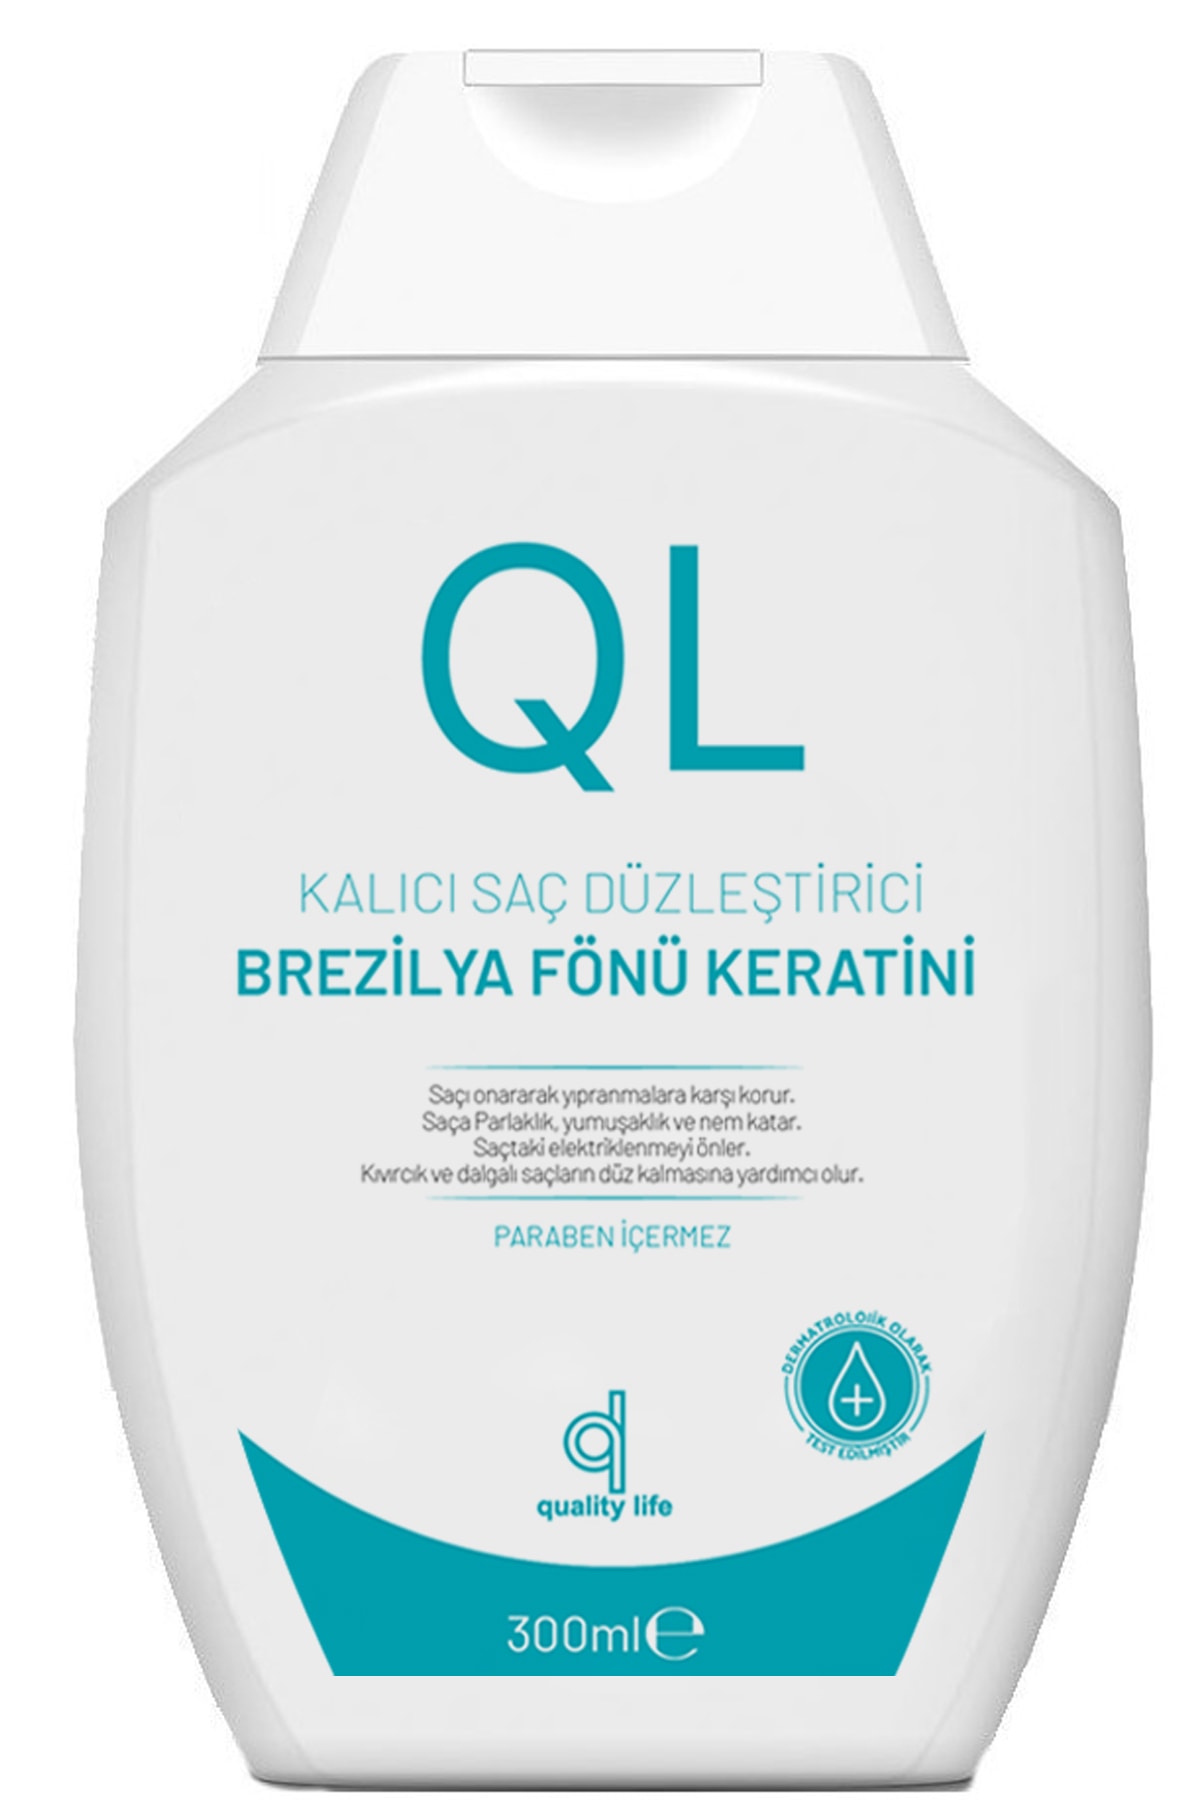 Quality Life Ql Brezilya Fönü Keratini Kalıcı Saç Düzleştirici 300 Ml